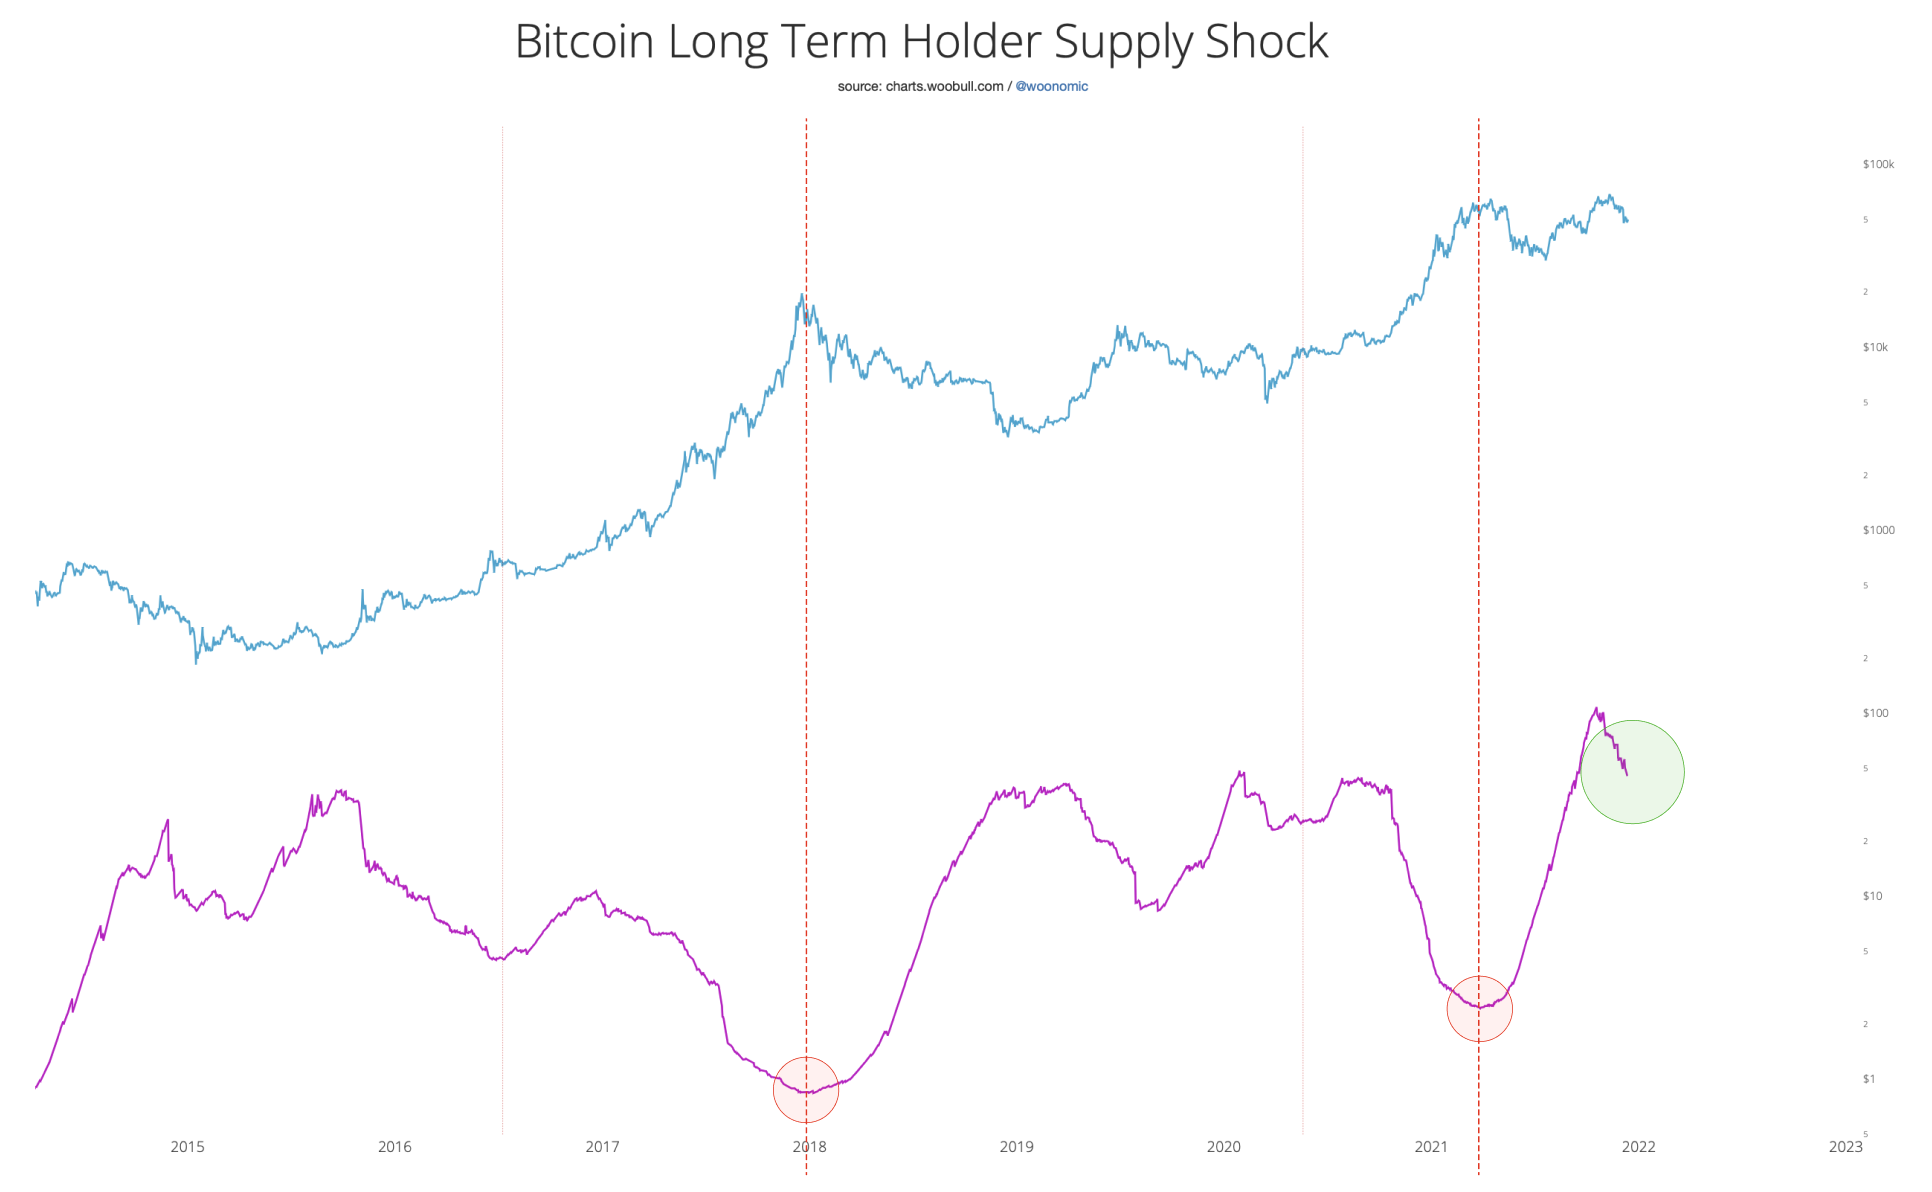 BTC supply shock chart